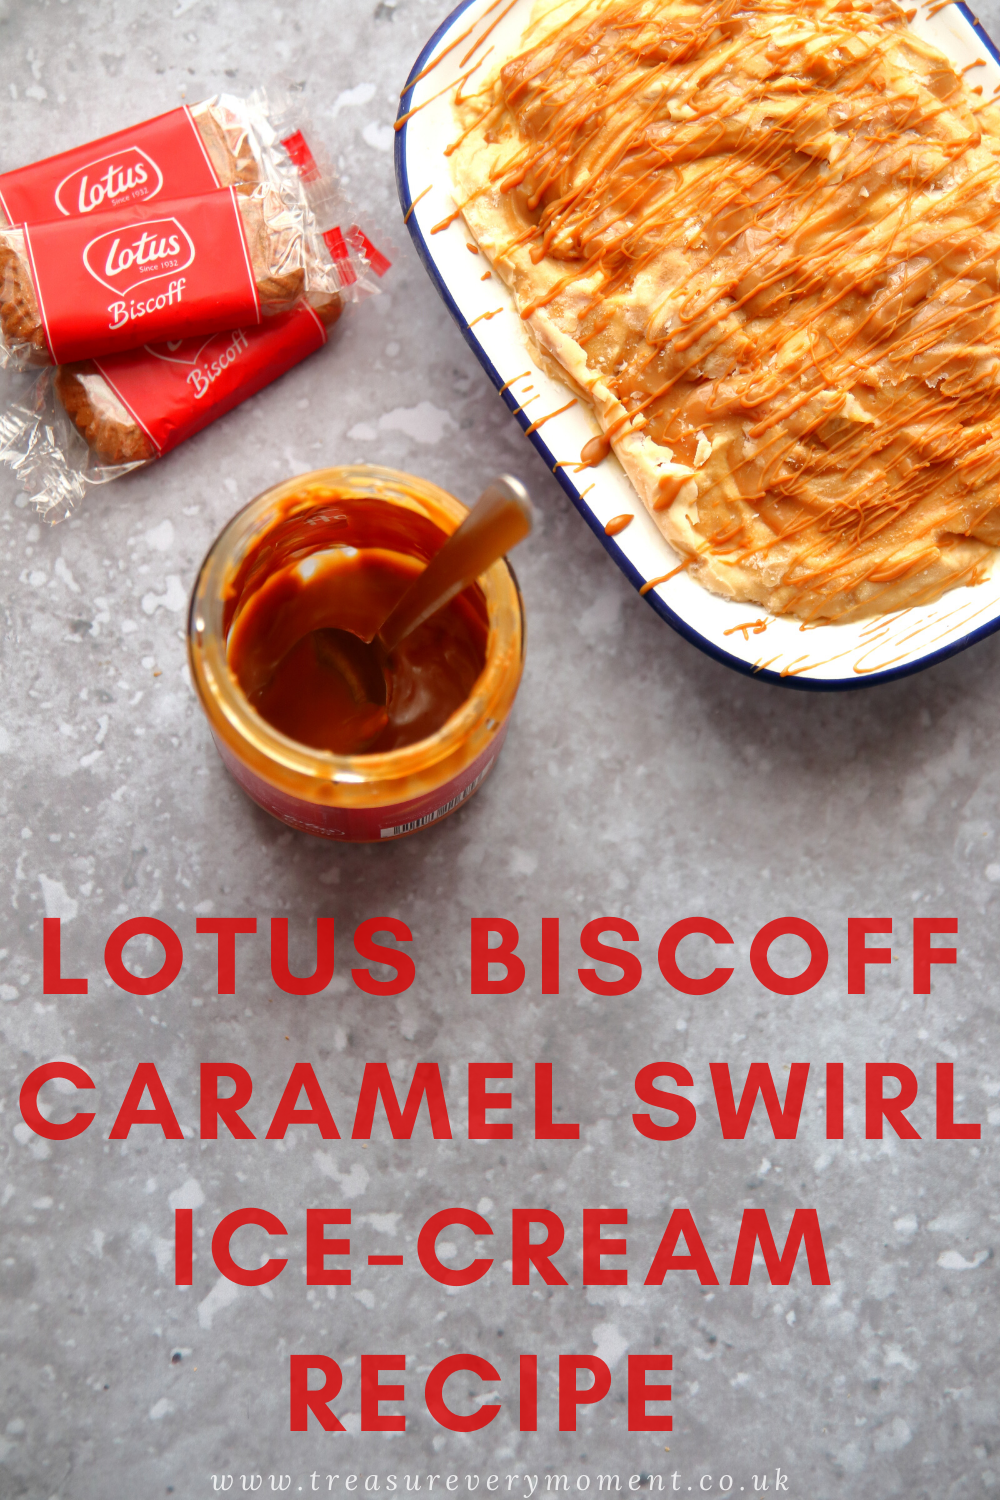 Lotus Biscoff Loaded Caramel Swirl Ice-Cream